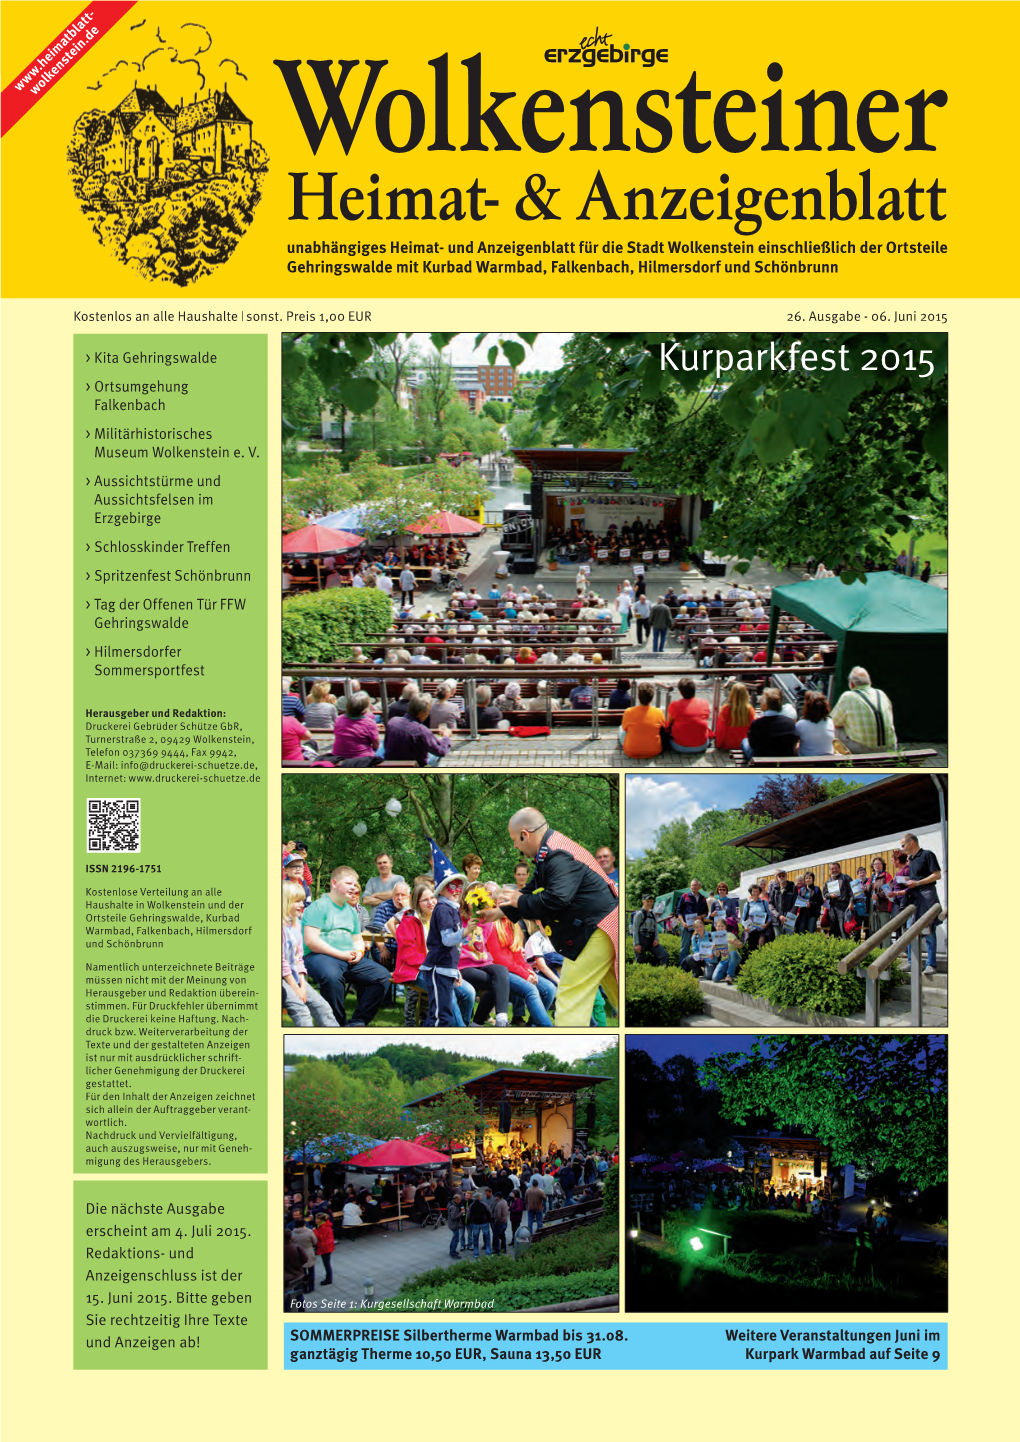 Kurparkfest 2015 > Ortsumgehung Falkenbach > Militärhistorisches Museum Wolkenstein E